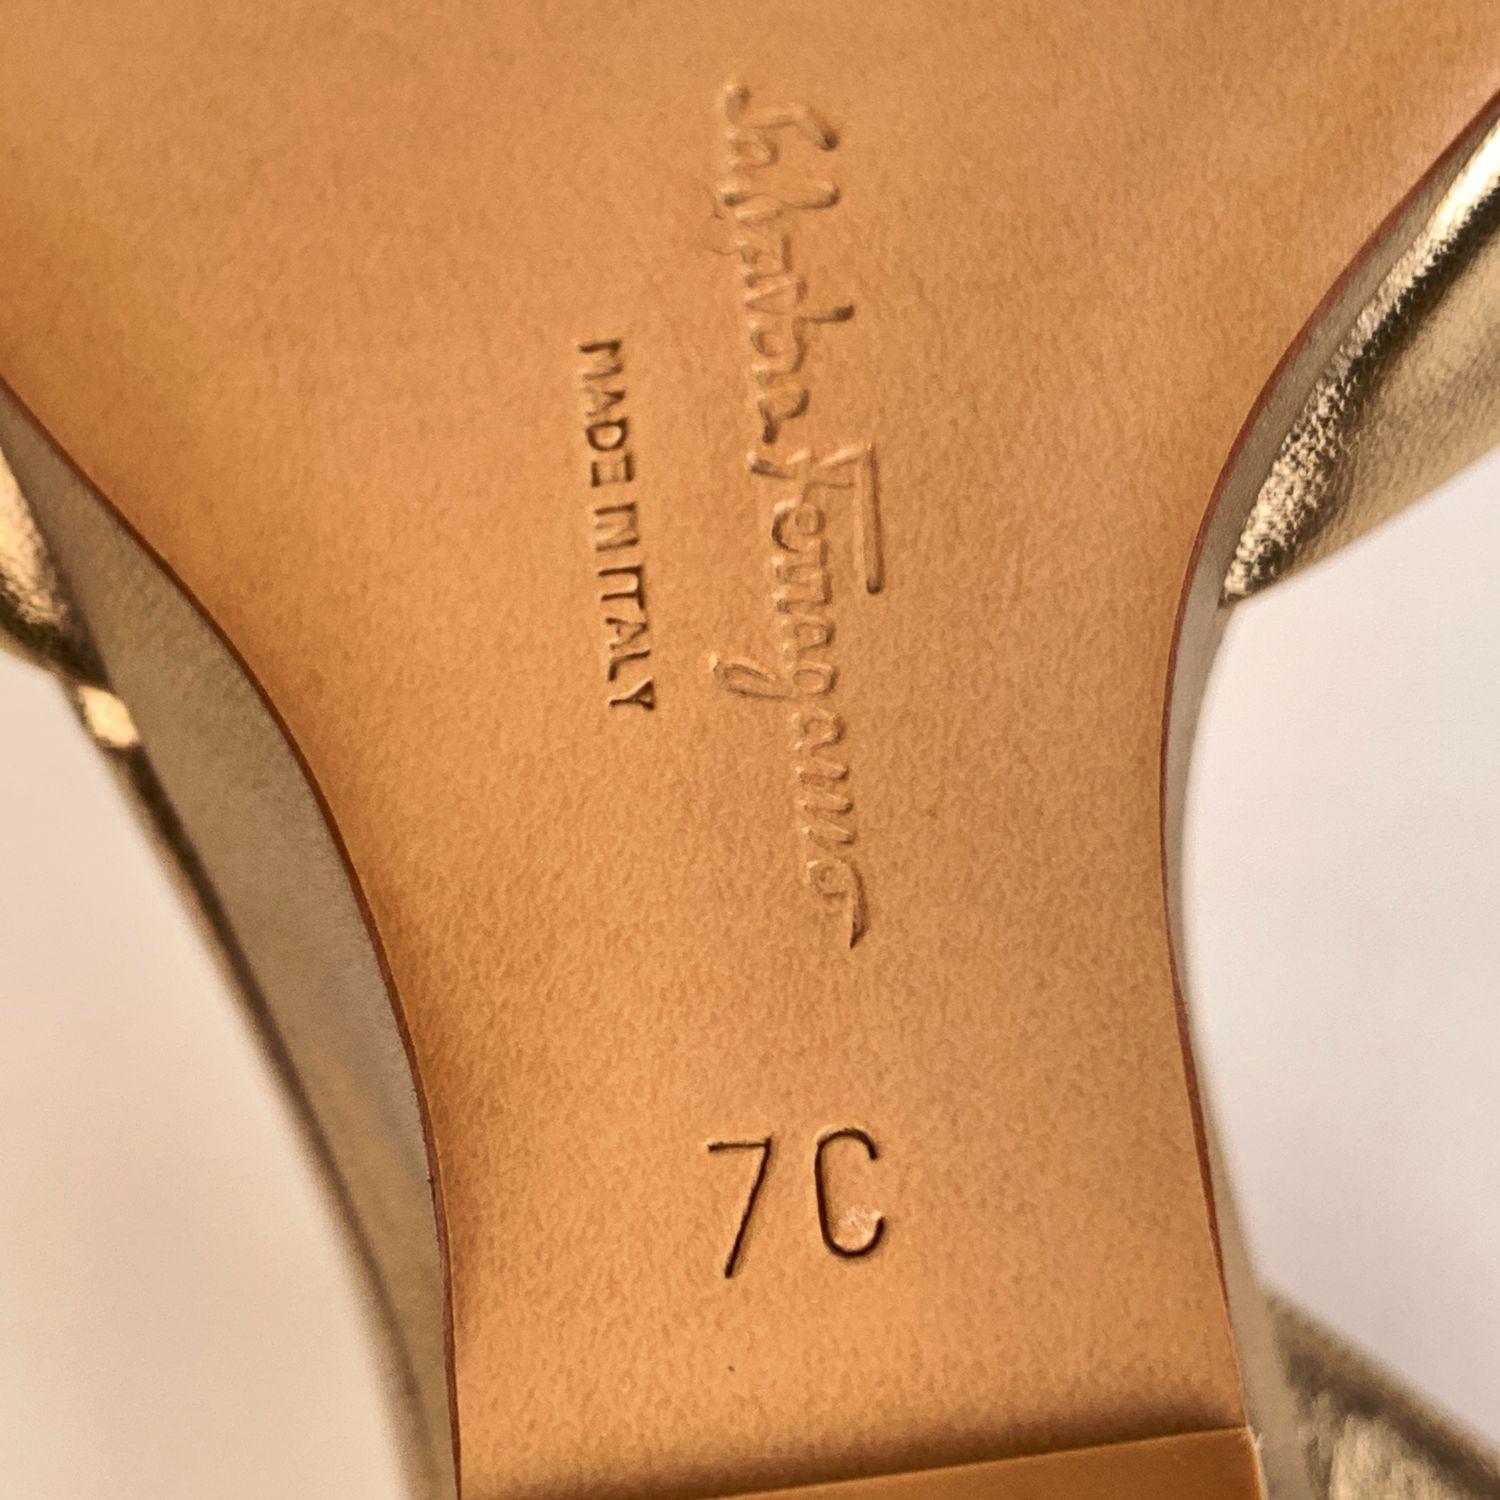 Salvatore Ferragamo Gold Leather Arsina Wedge Sandals US 7C EU 37.5 3